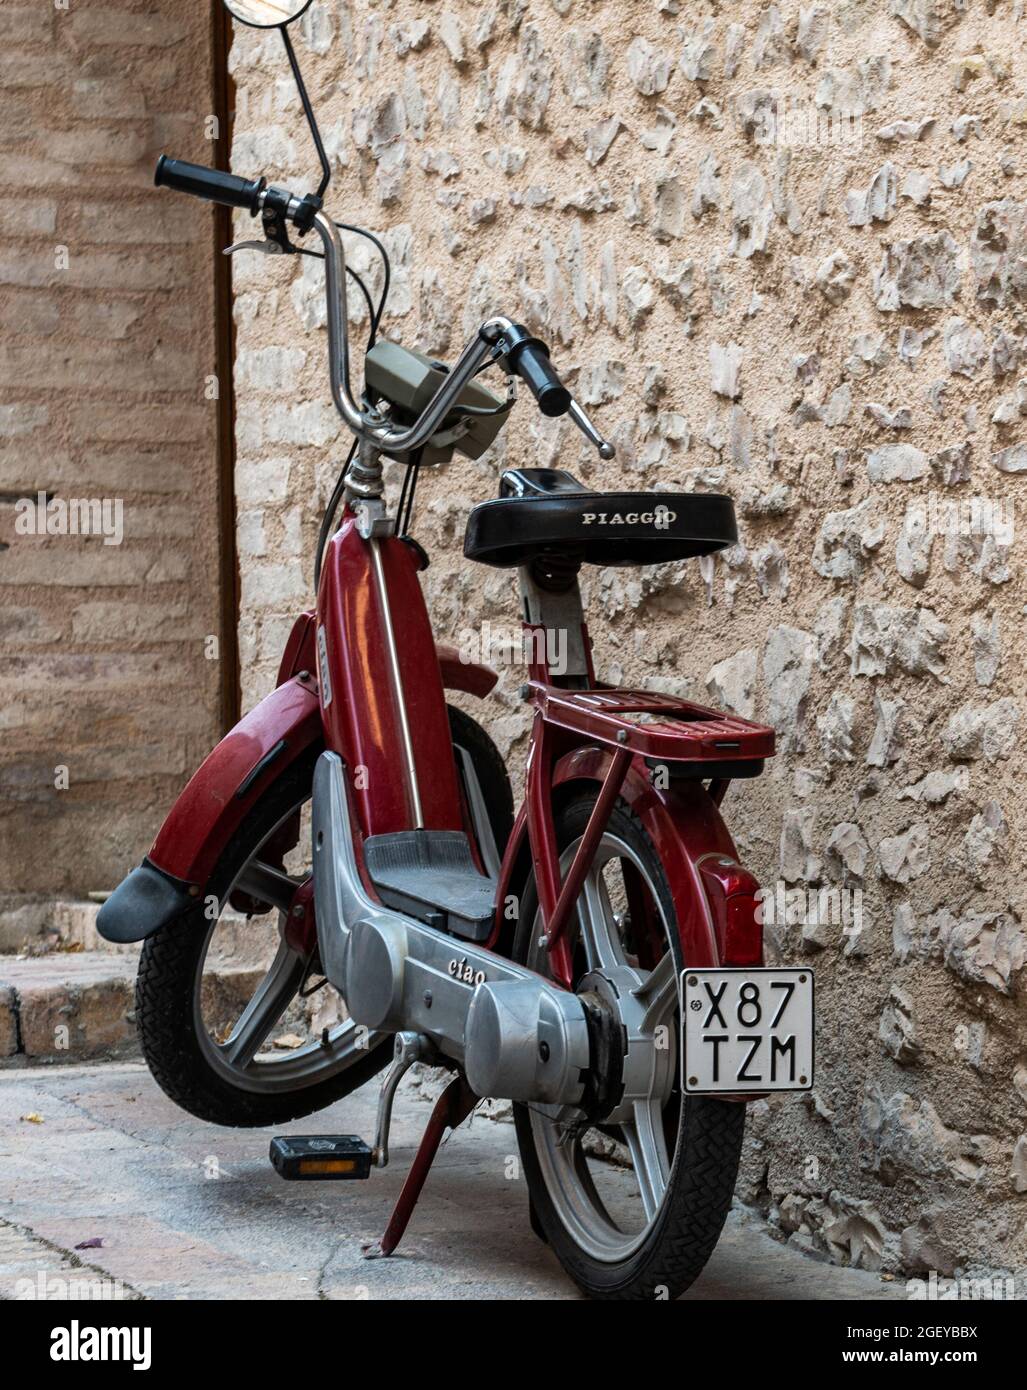 spello, italie août 21 2020:vintage piaggio scooter haute couleur rouge  Photo Stock - Alamy